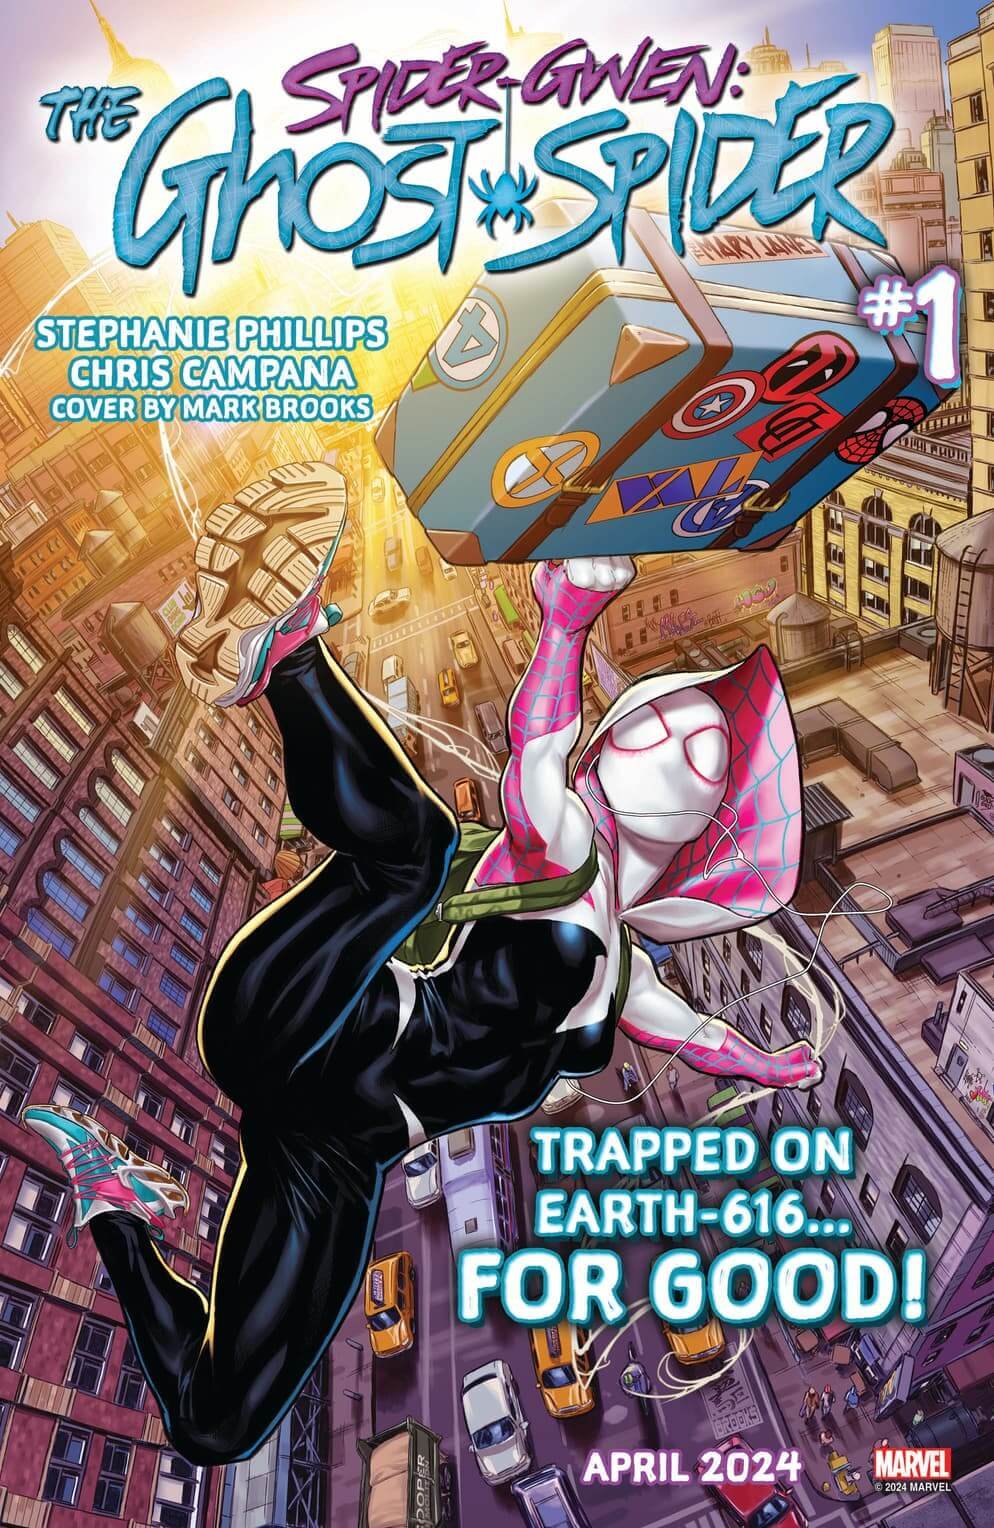 Couverture de Spider-Gwen : Ghost-Spider 1 par Mark Brooks